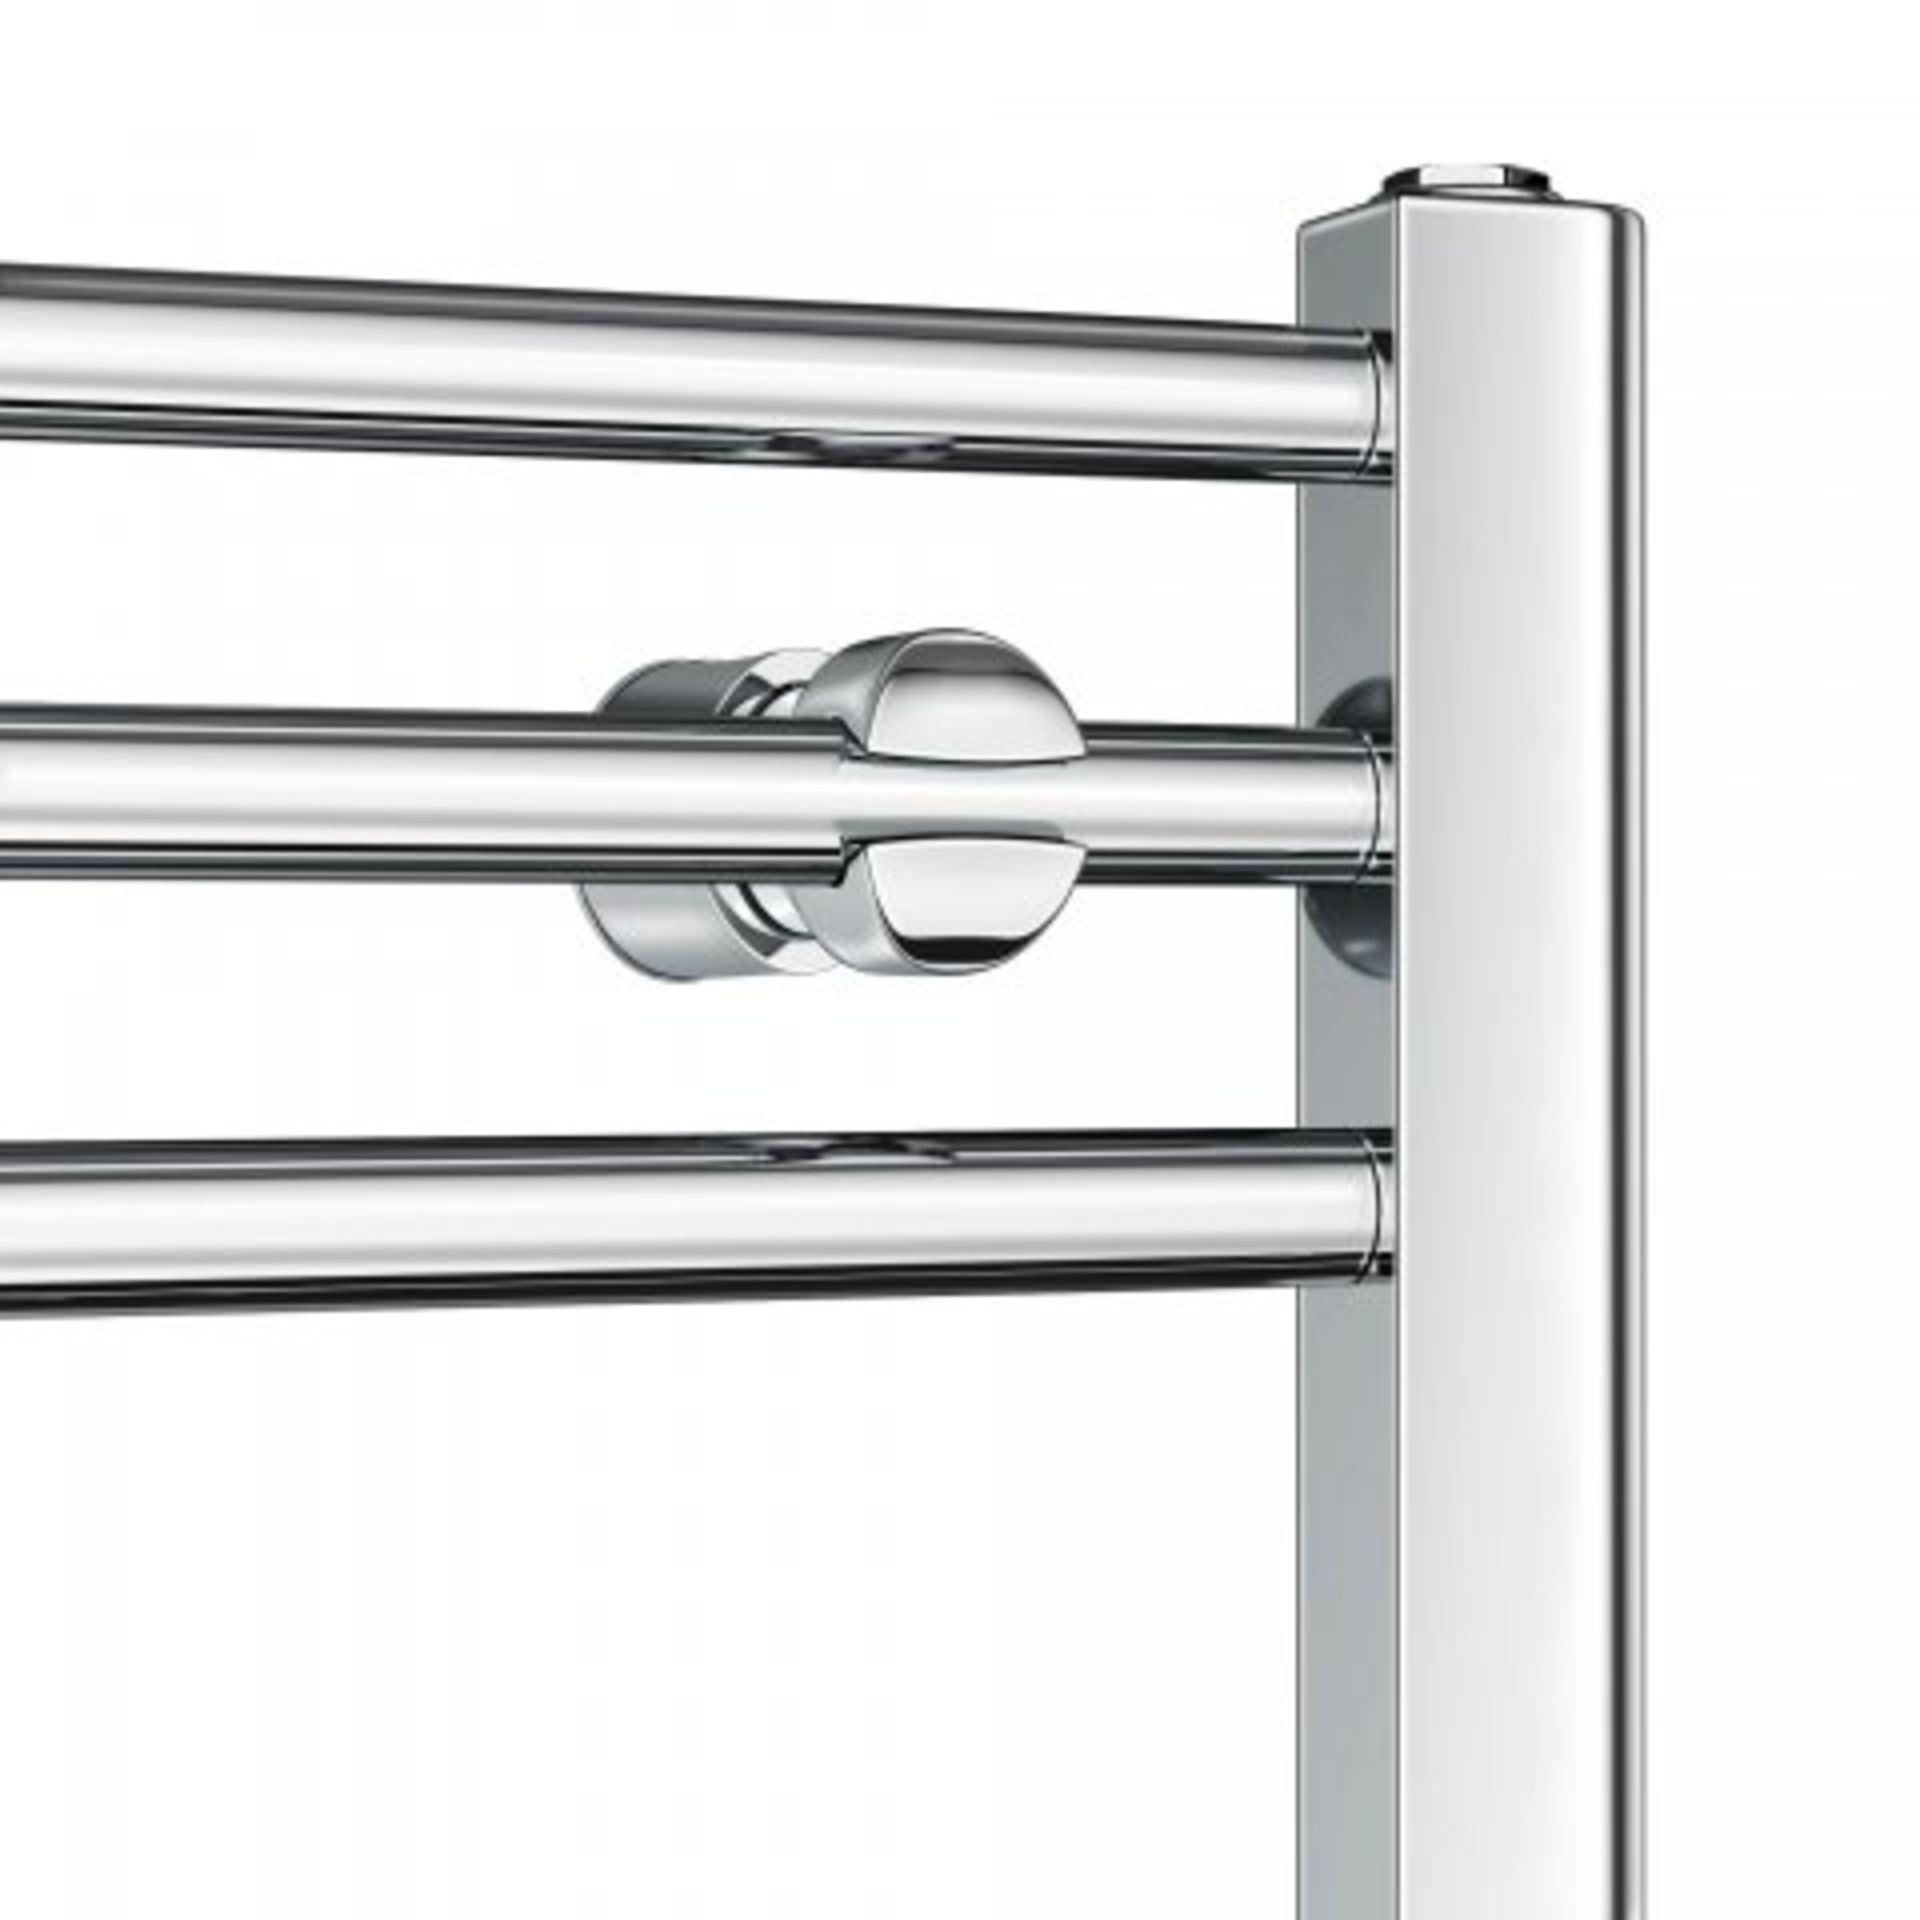 (I5) 800x600mm - 20mm Tubes - Chrome Heated Straight Rail Ladder Towel Radiator - Natasha Range - Image 4 of 5